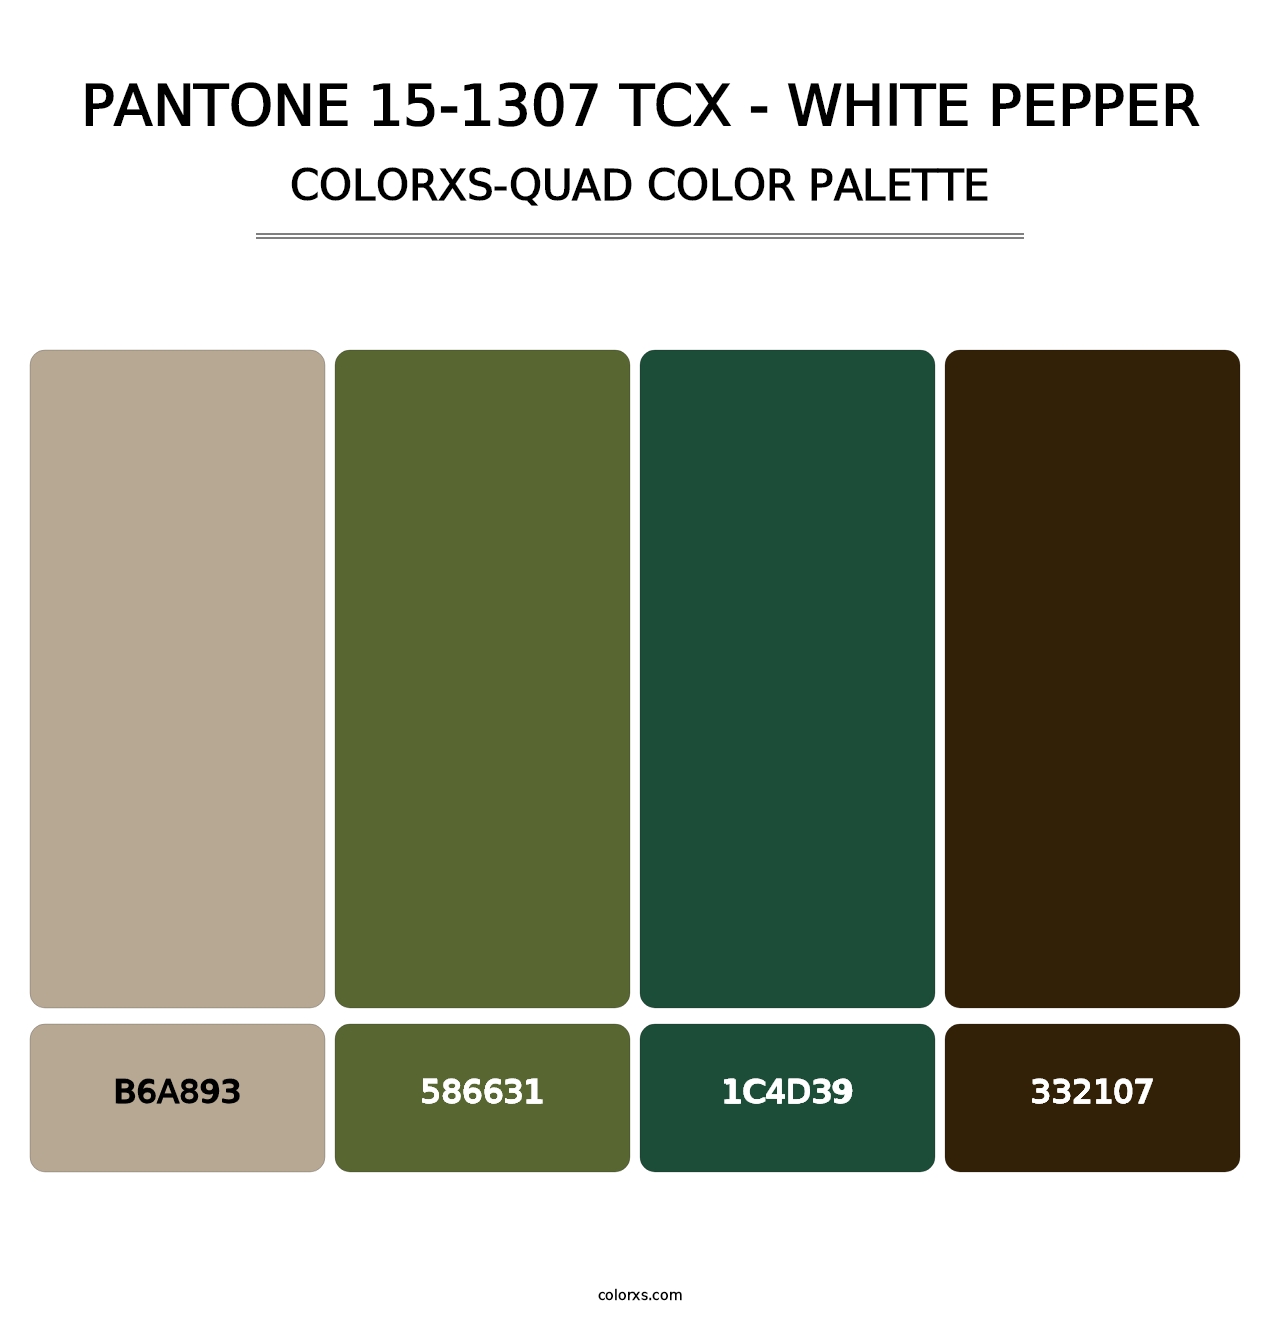 PANTONE 15-1307 TCX - White Pepper - Colorxs Quad Palette